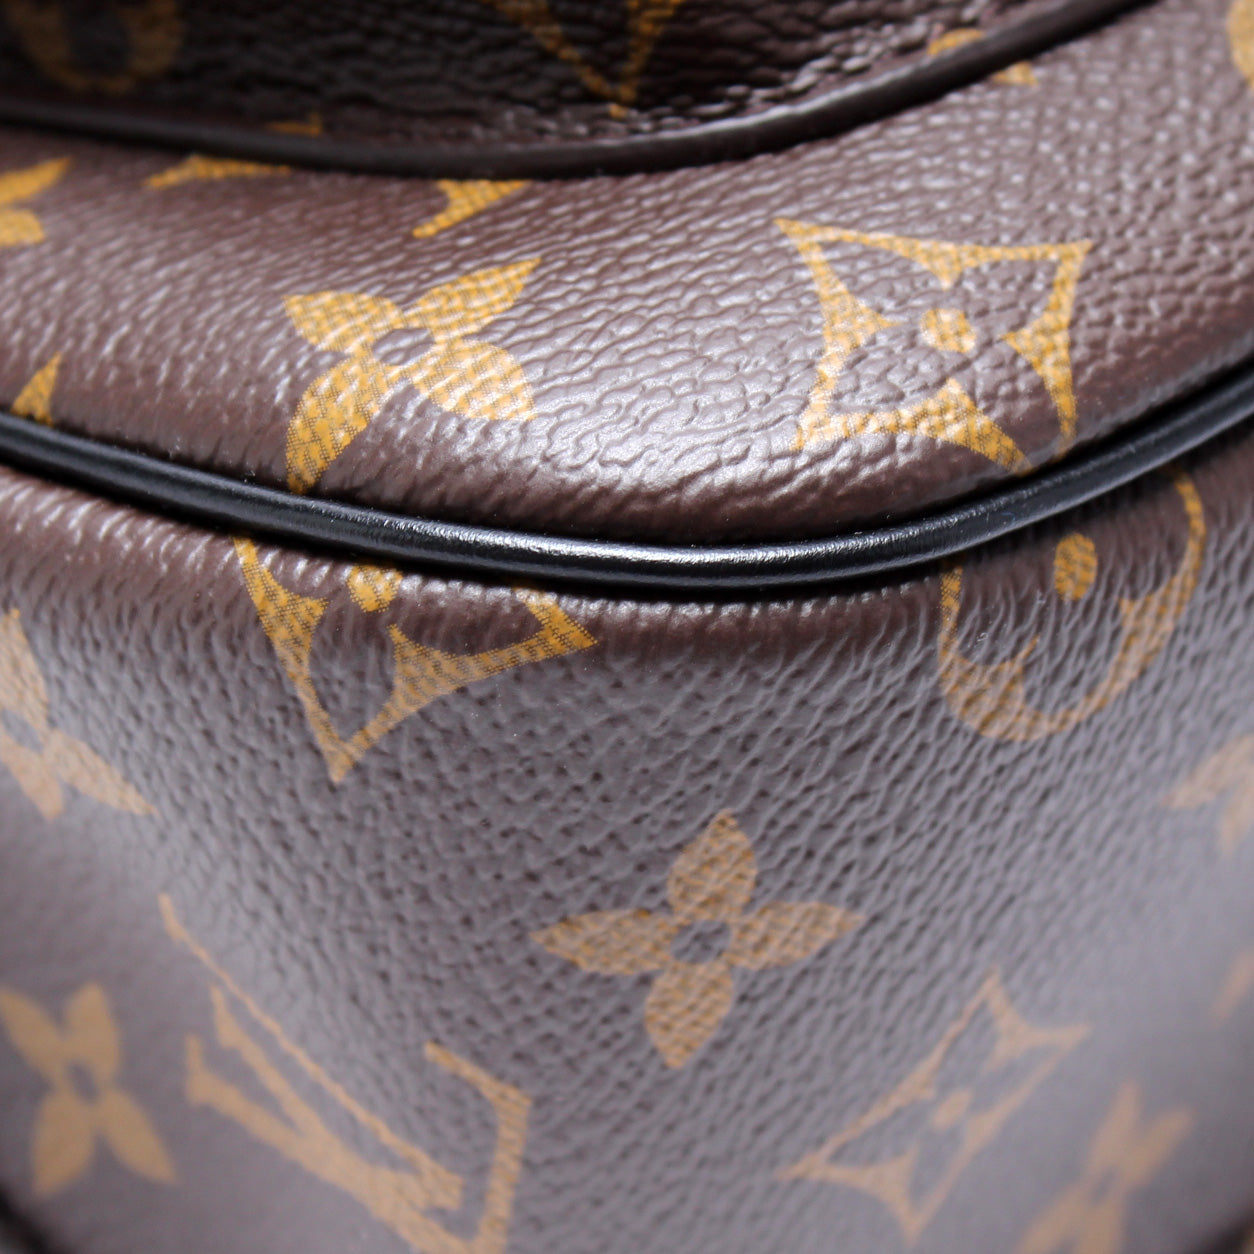 Passy NM Monogram – Keeks Designer Handbags